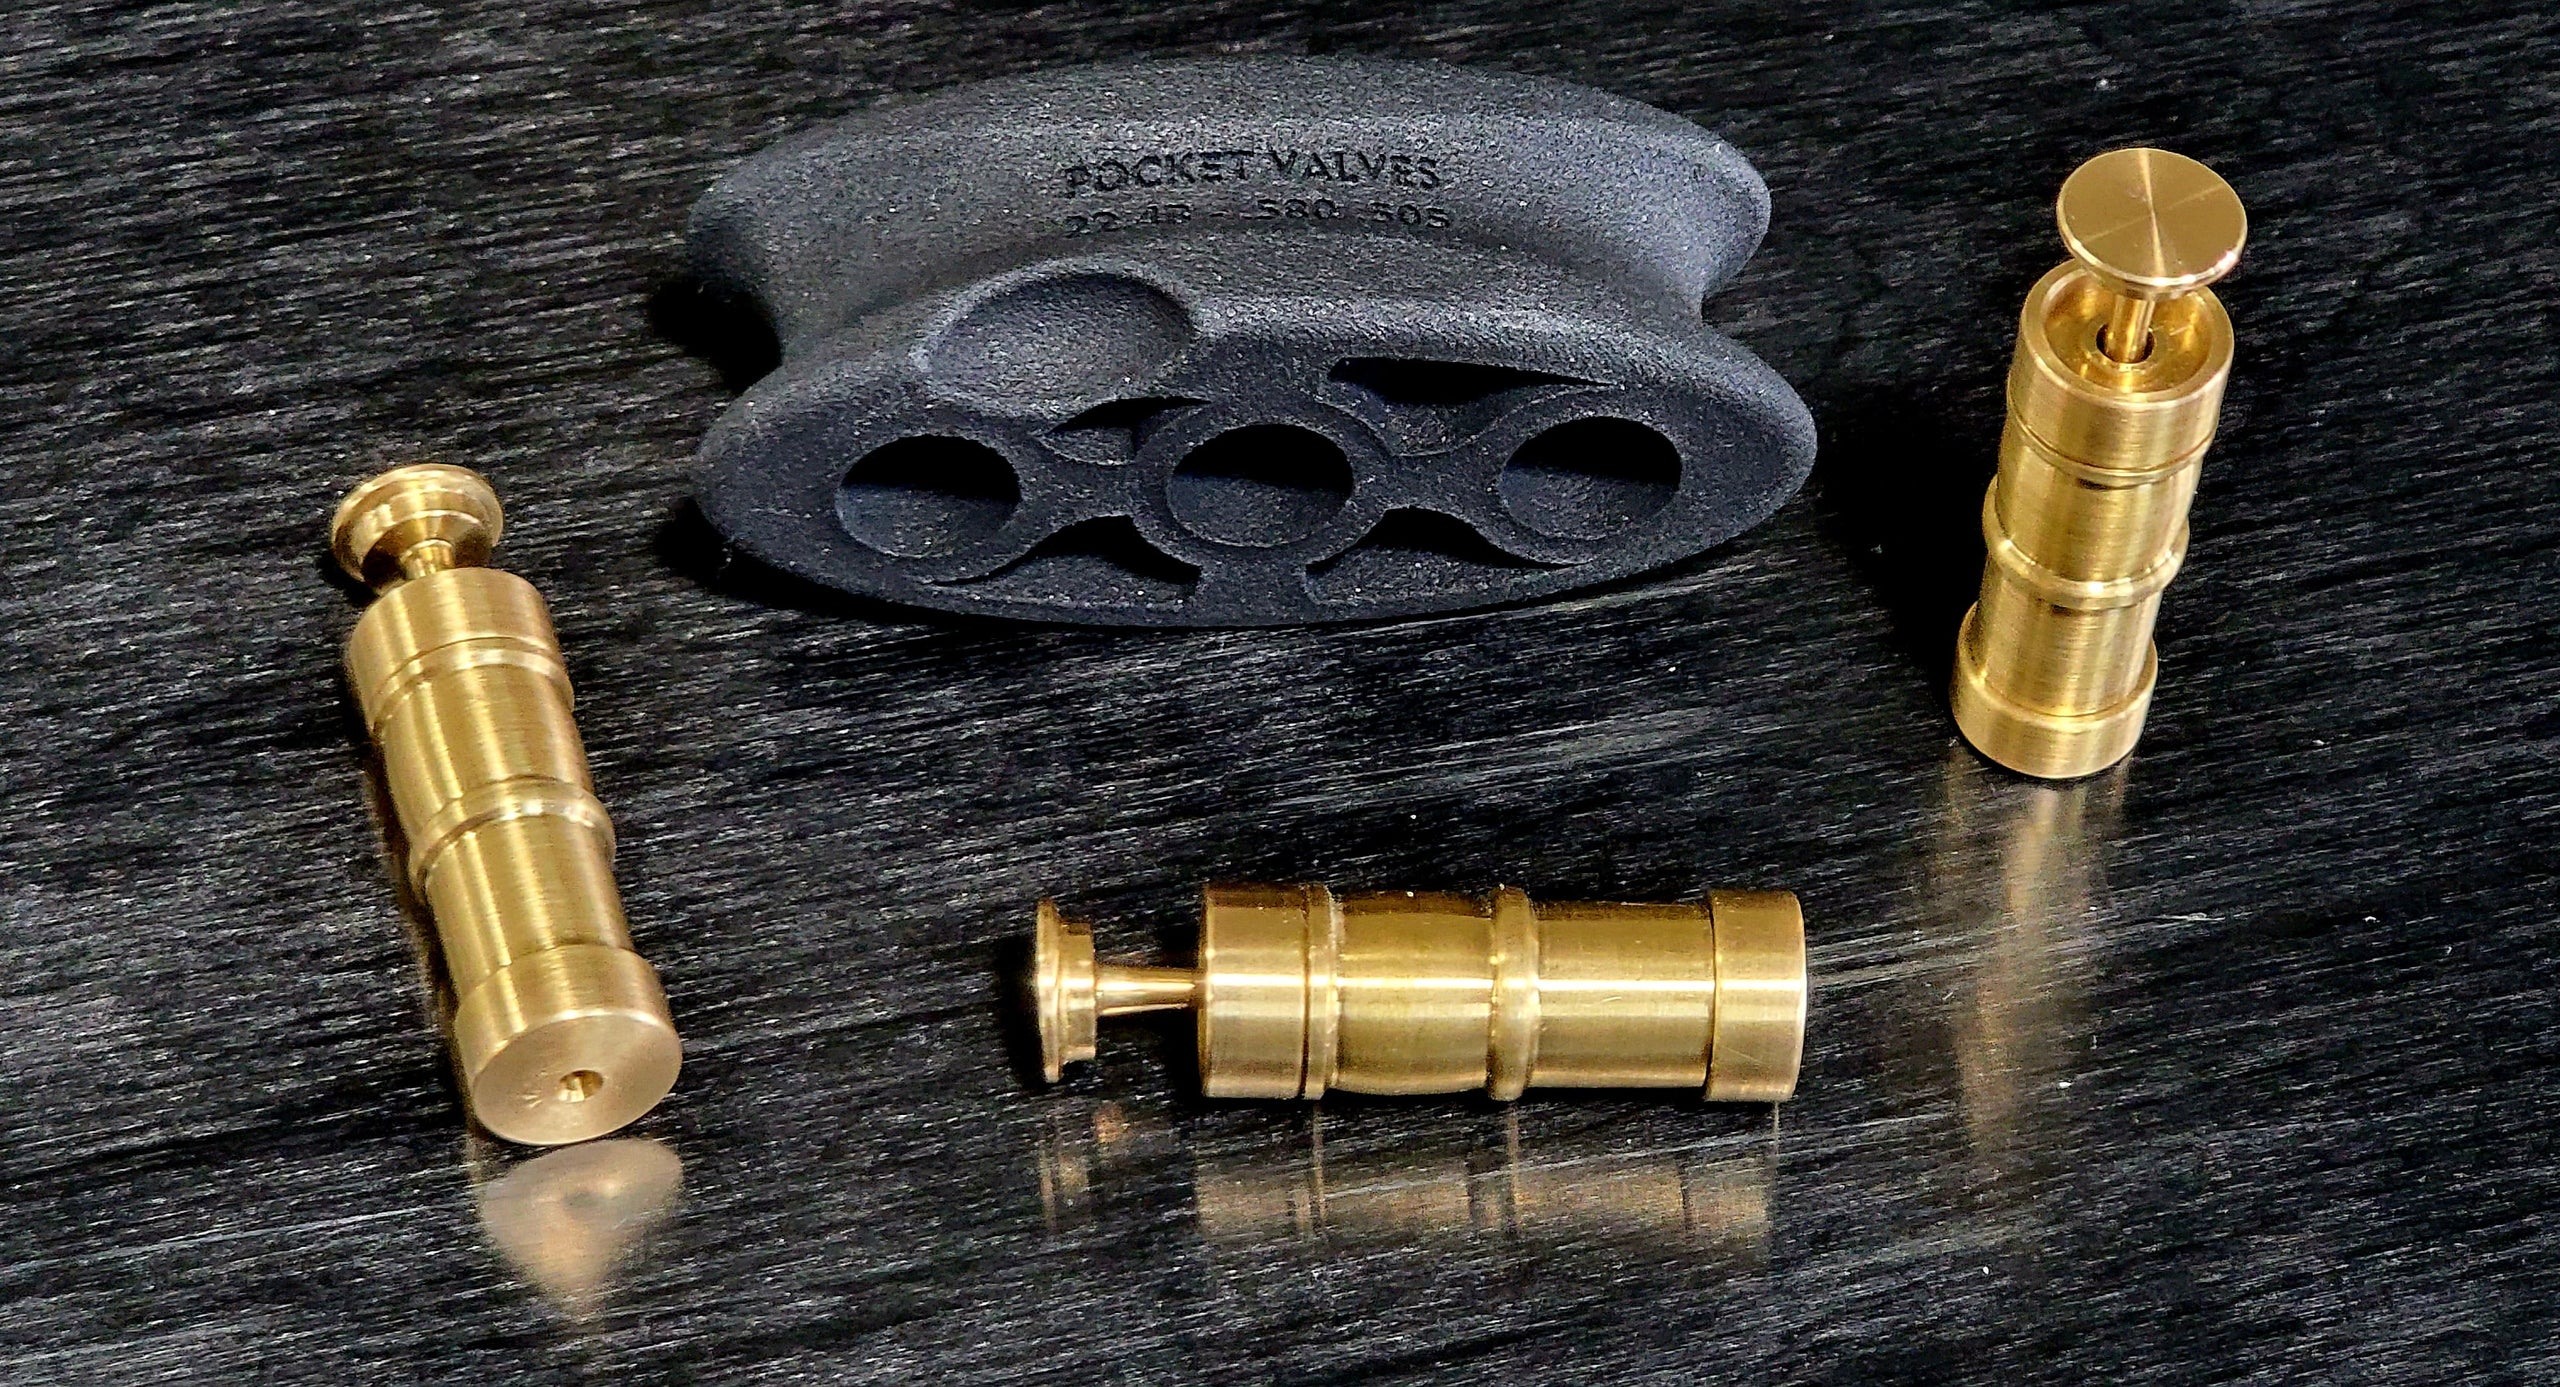 Pocket Valves for Brass Players